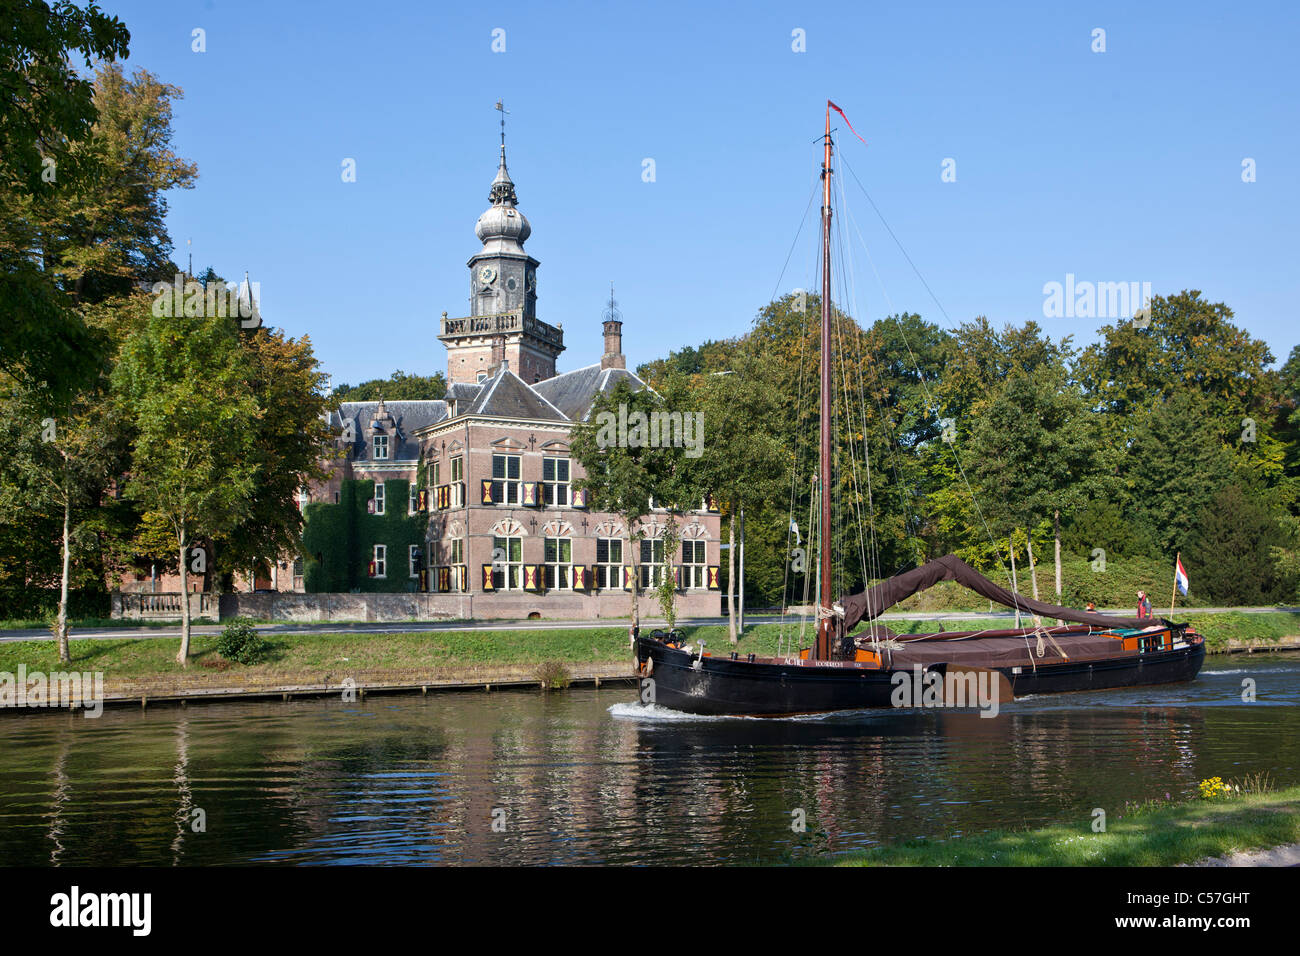 The Netherlands, Breukelen, Nyenrode, Nijenrode Castle along the river Vecht. Nyenrode Business University. Traditional sailing boat. Stock Photo